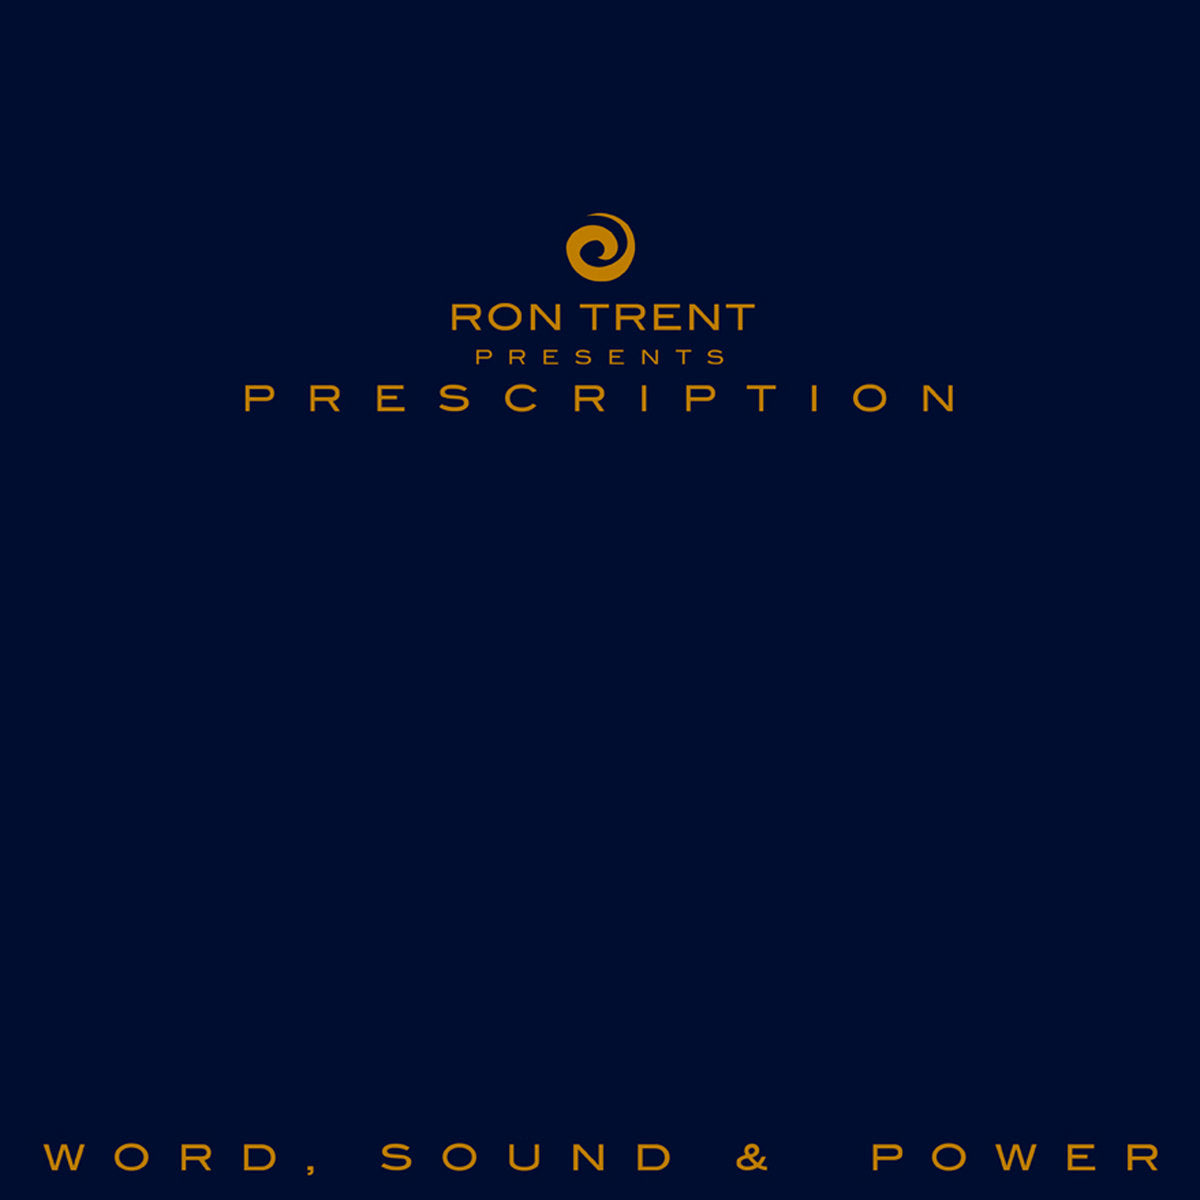 POWER　TRENT　SOUND　WORD,　RON　PRESCRIPTION　PRESENTS　Music　–　(6　X　BOX)　LP　Horizons